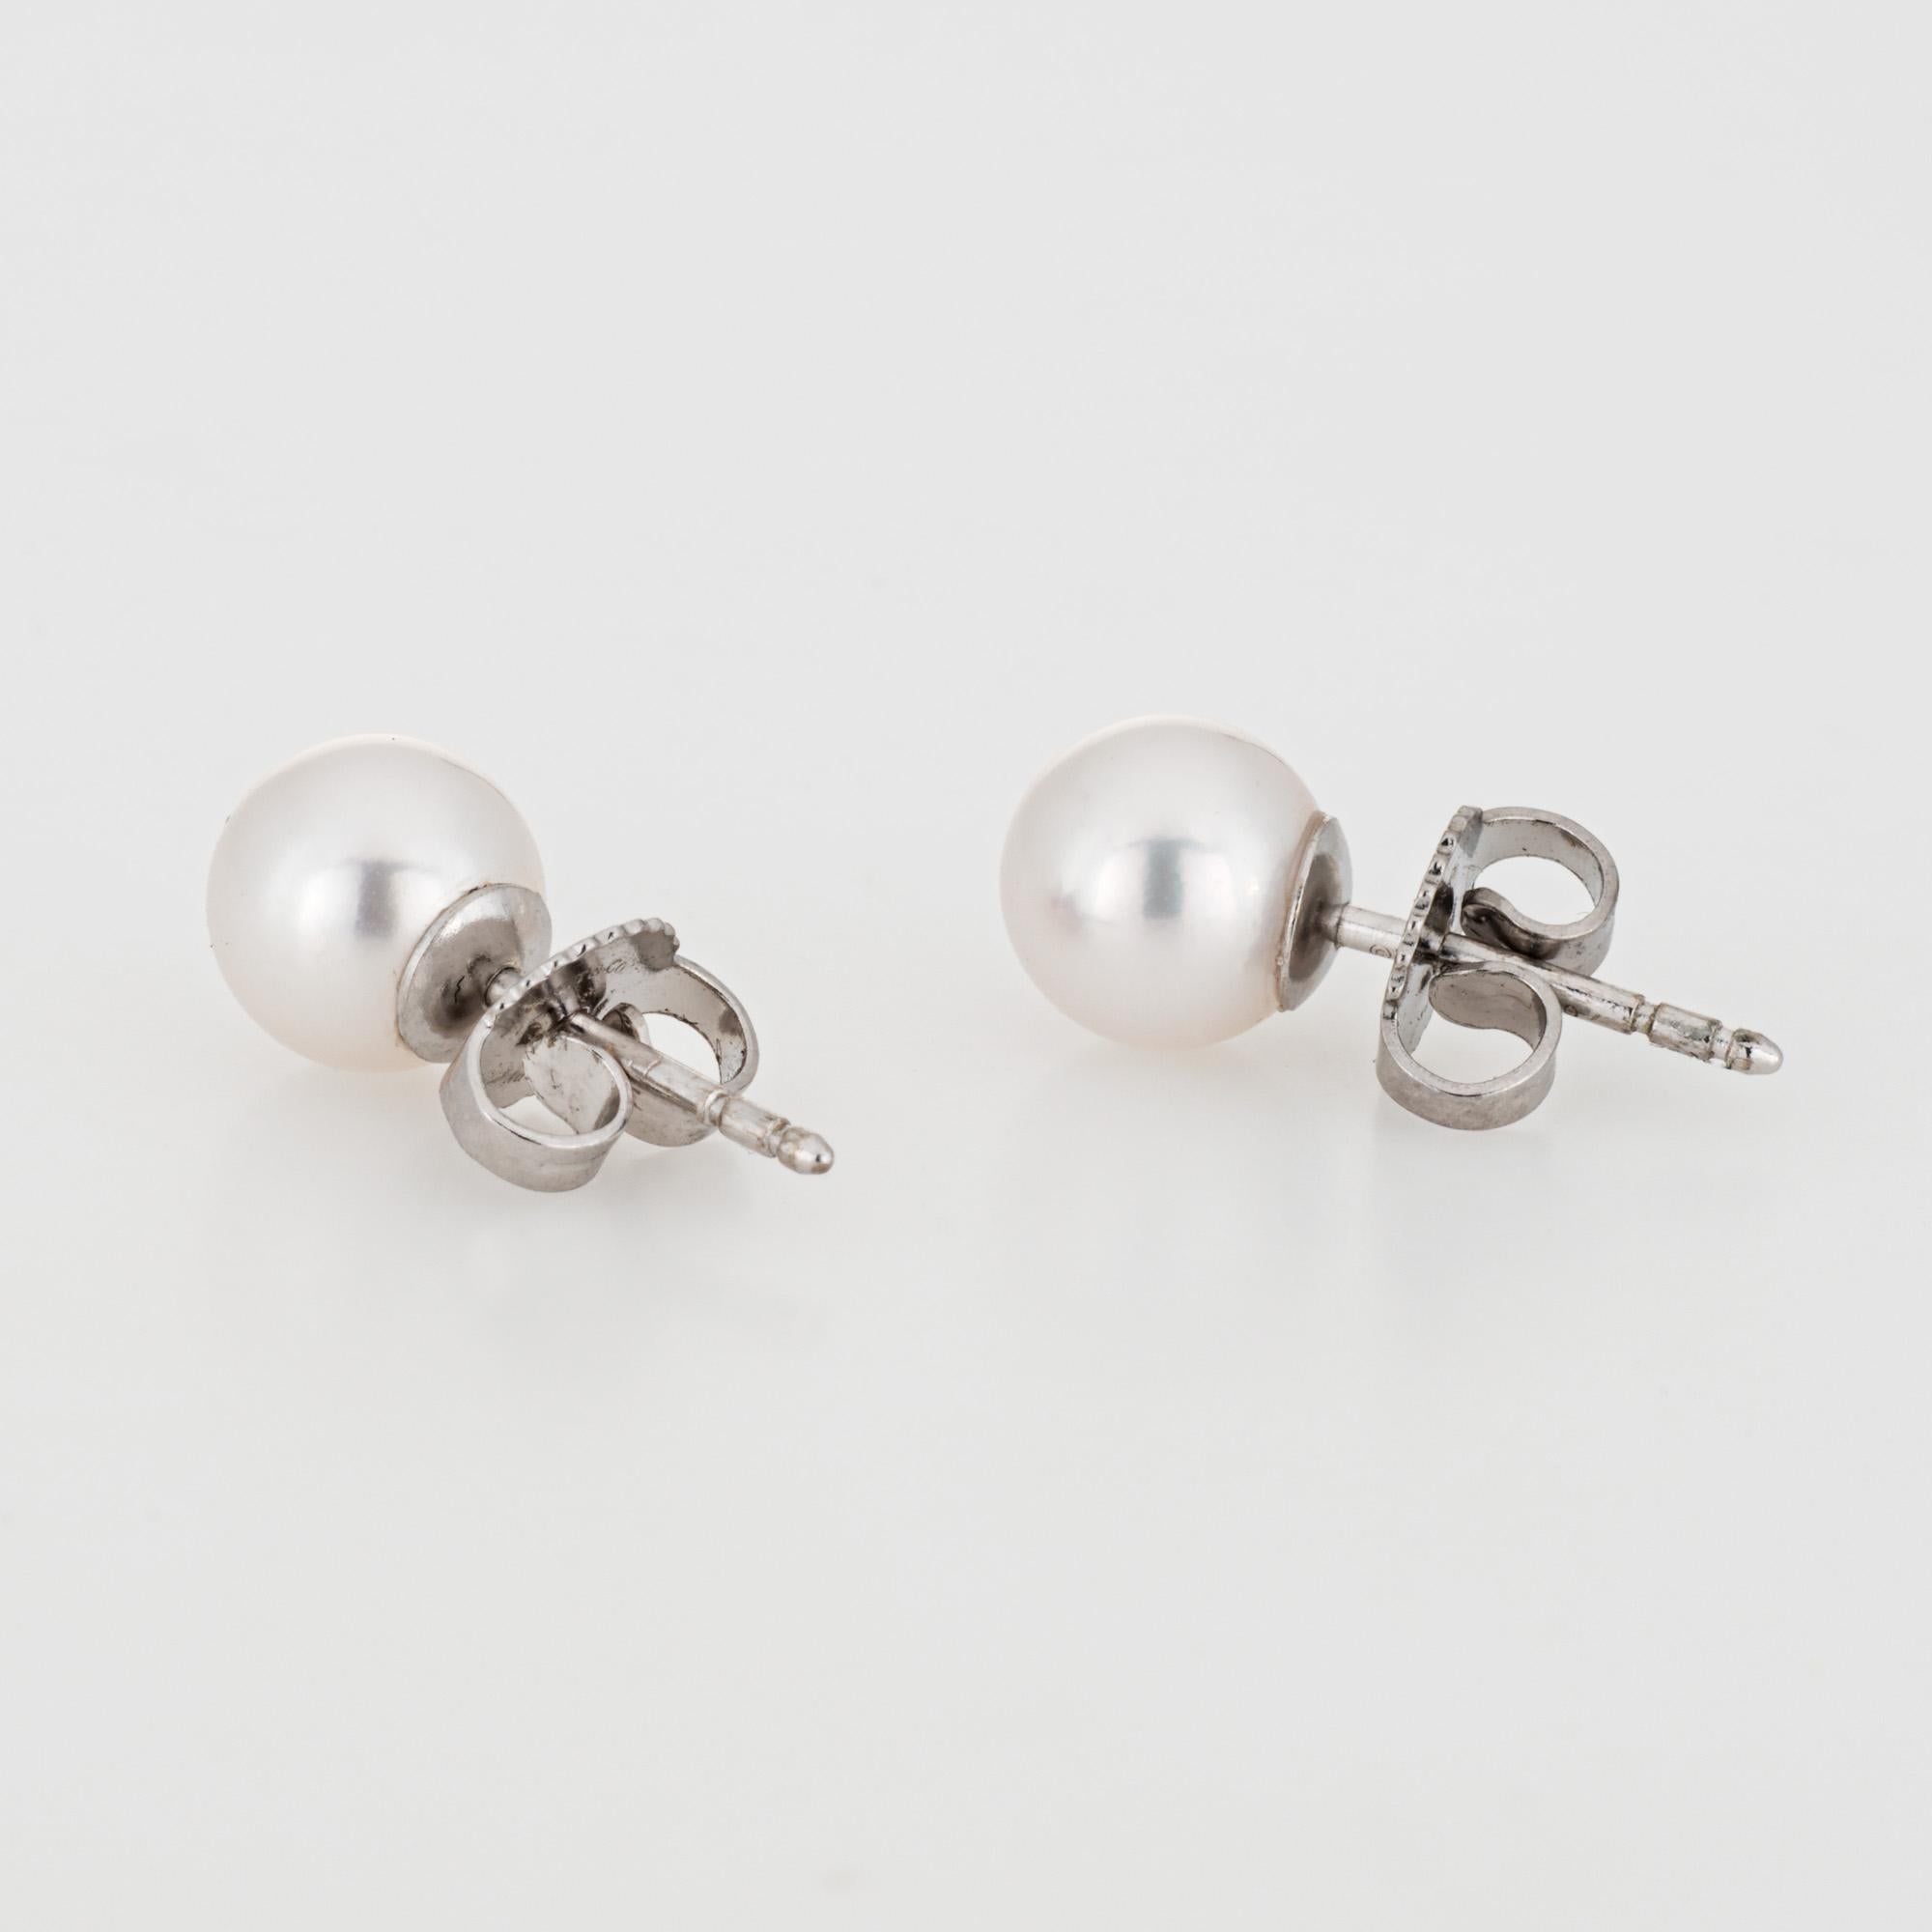 Modern Tiffany & Co Signature Pearl Earrings 7mm Studs 18k White Gold Estate Jewelry